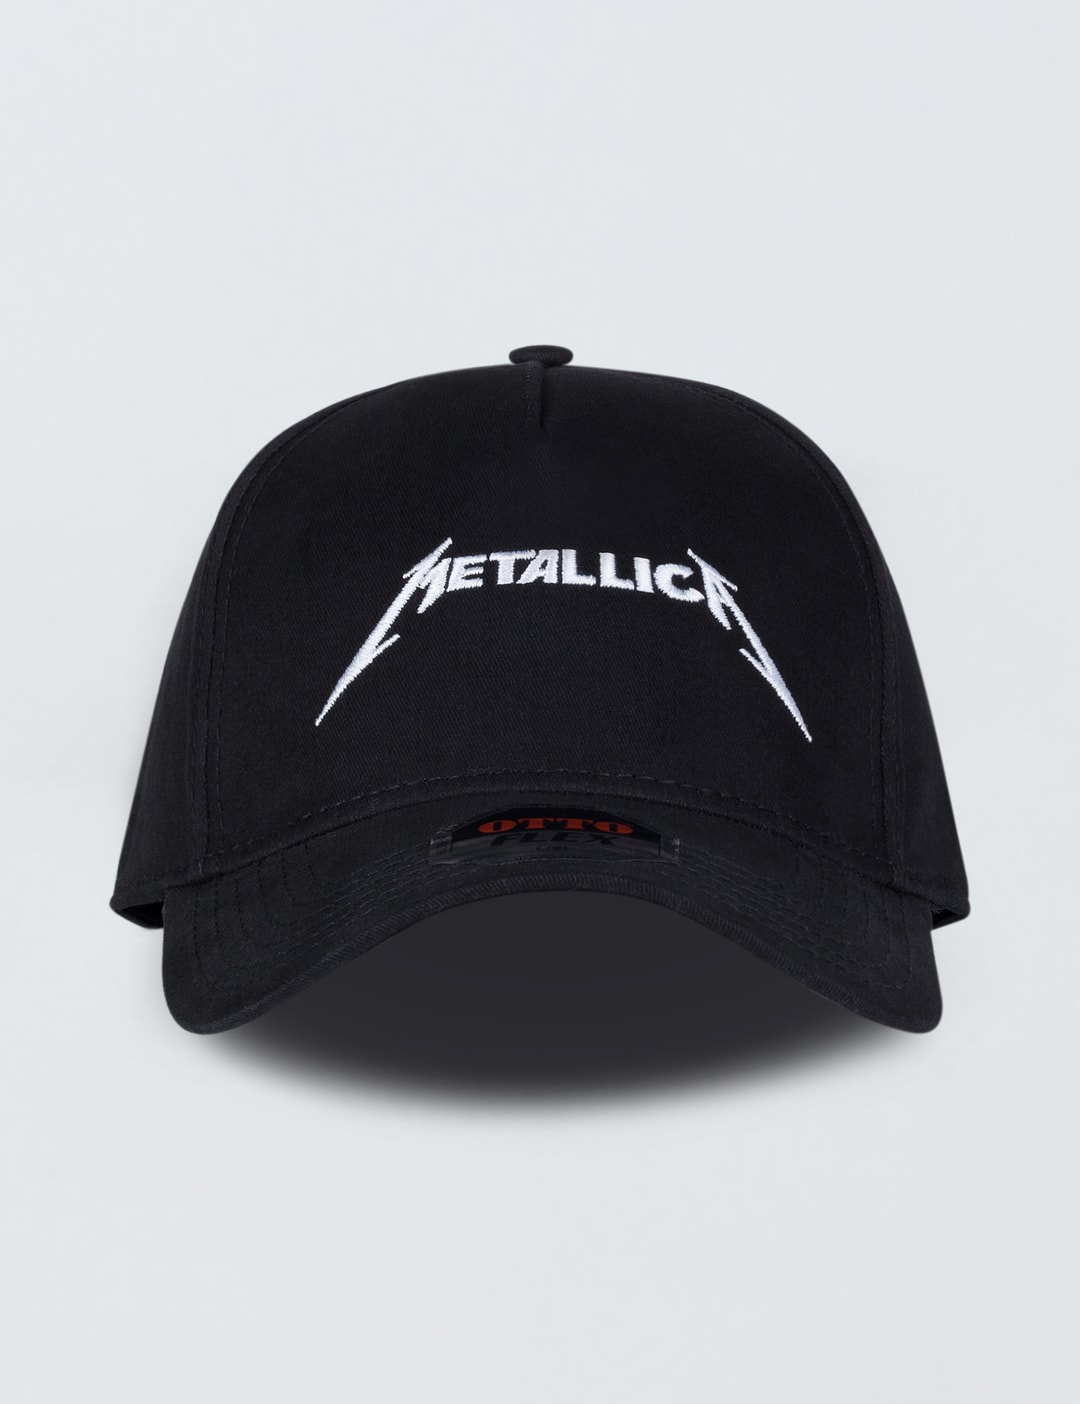 Tour Merch - Metallica Logo Cap | HBX - Globally Curated Fashion and ...